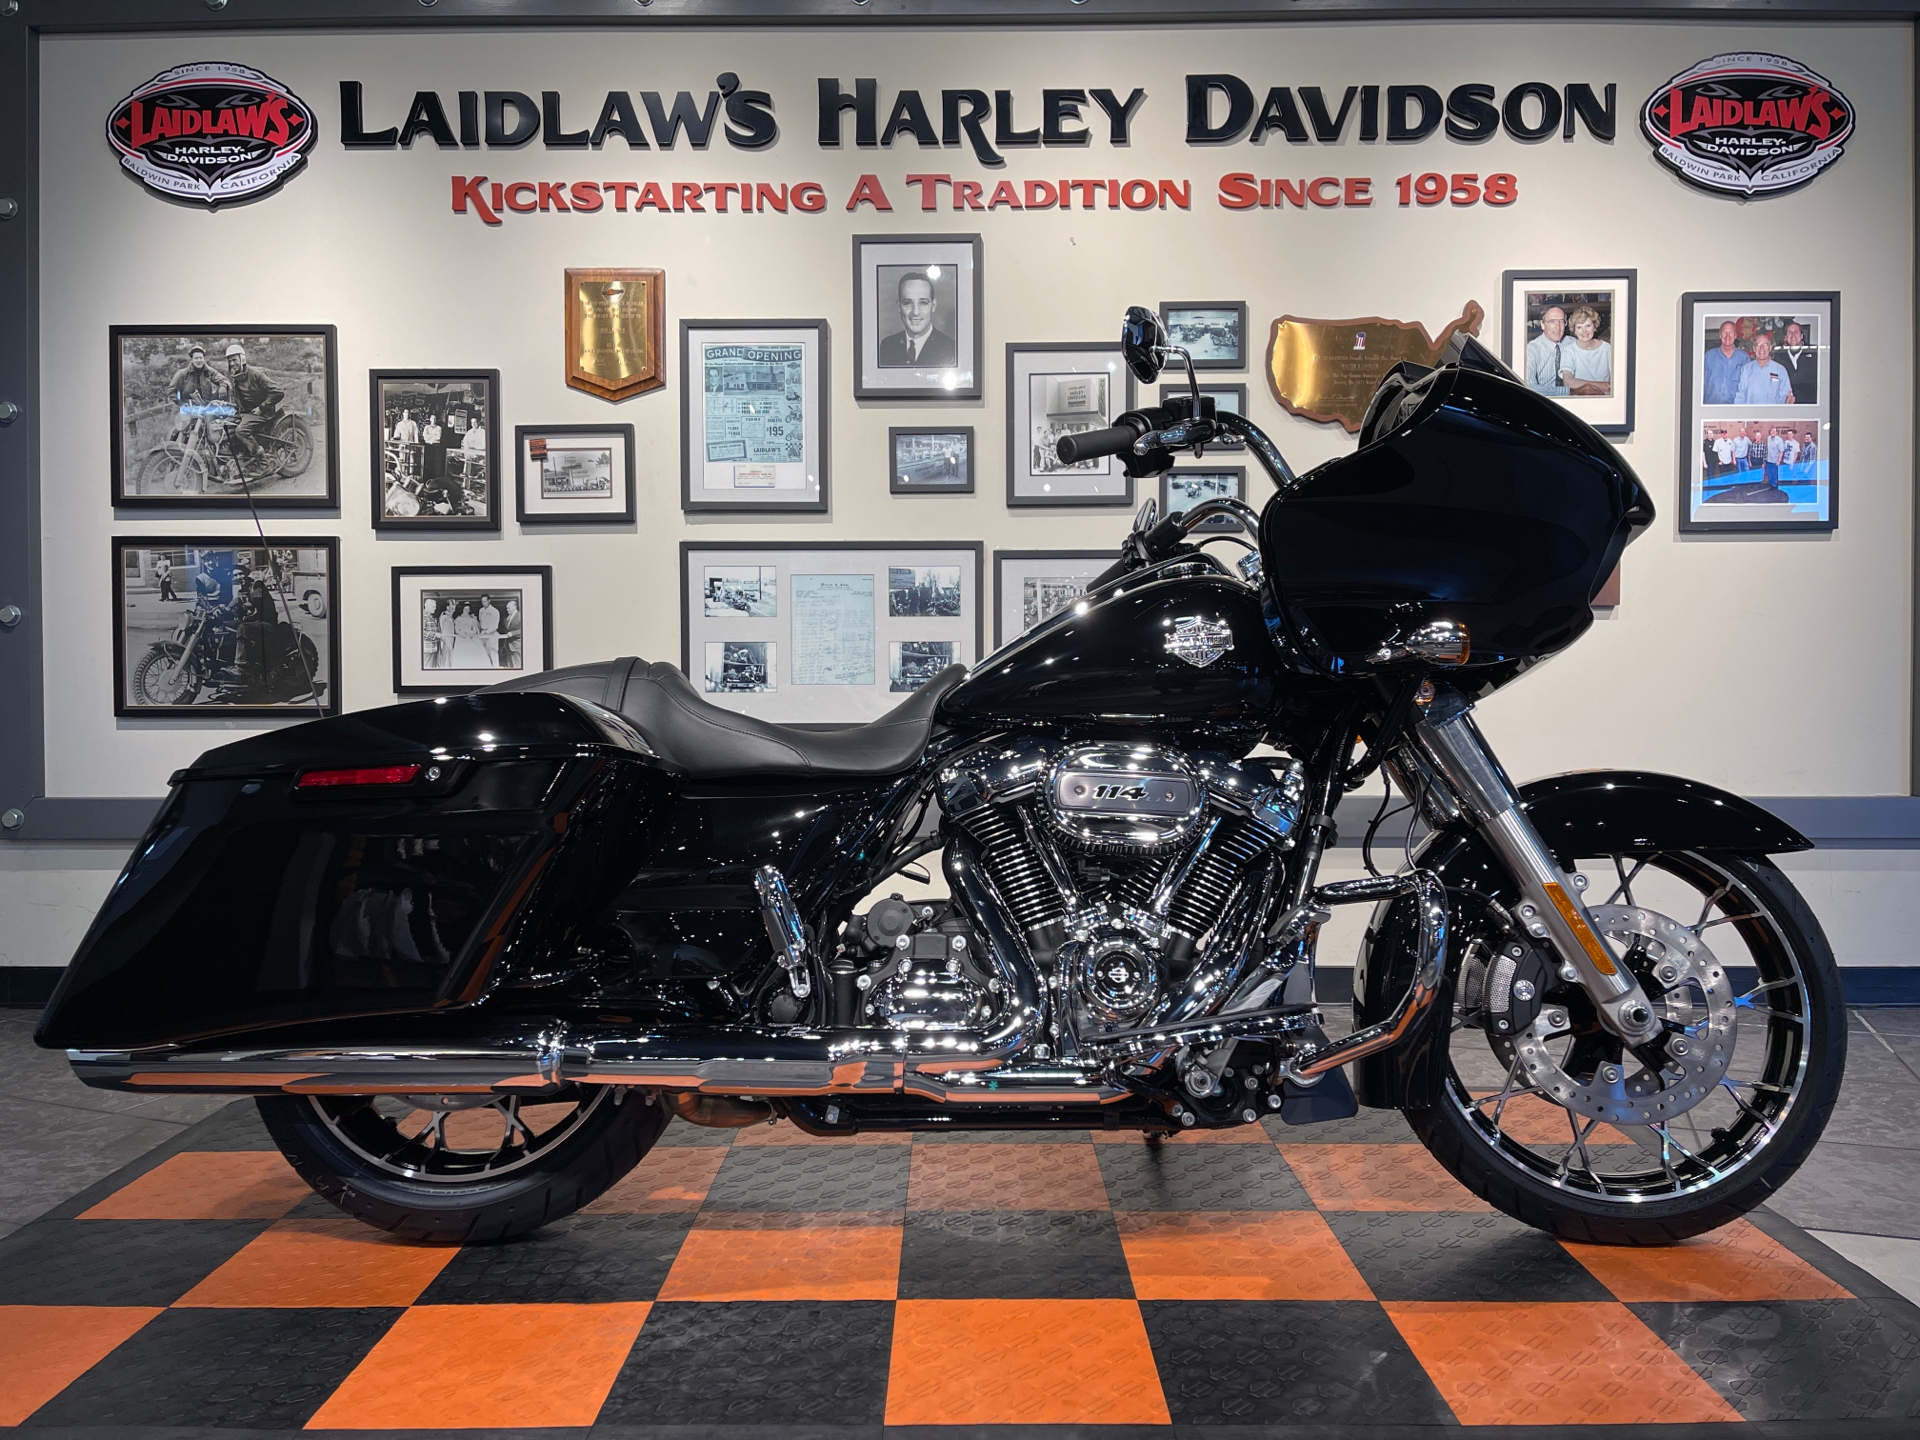 New 2021 Harley Davidson Road Glide Special Vivid Black Chrome Option Baldwin Park Ca 29557